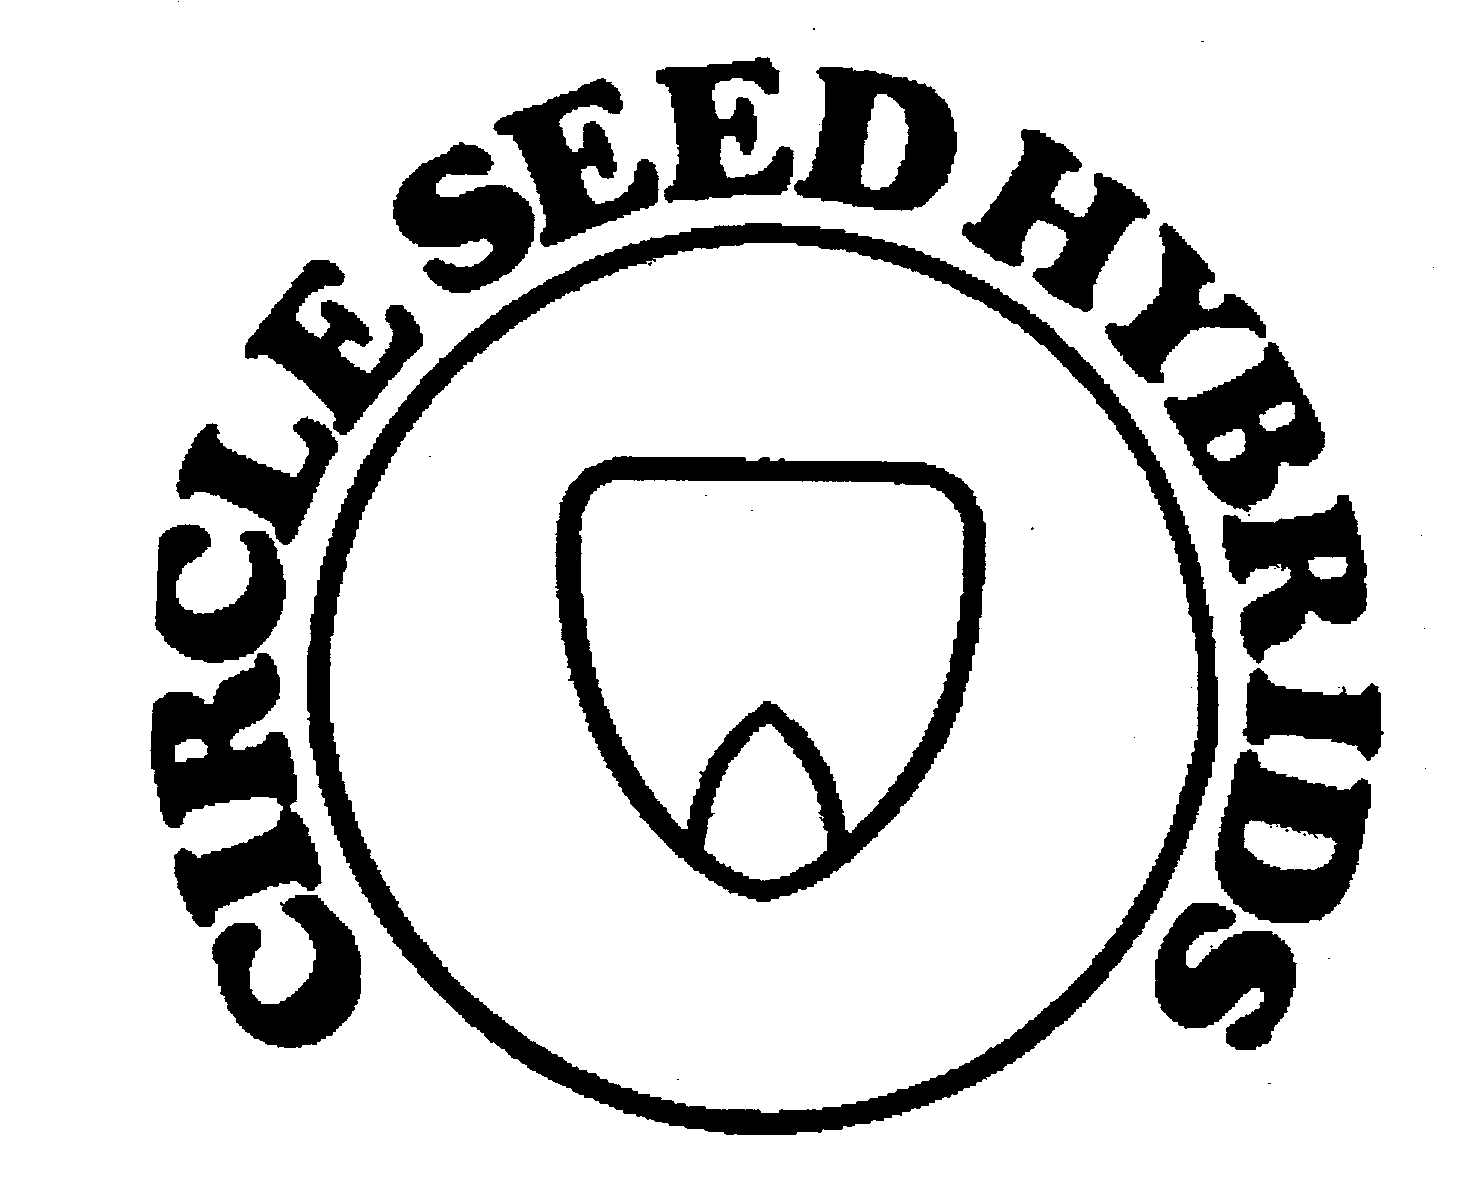  CIRCLE SEED HYBRIDS